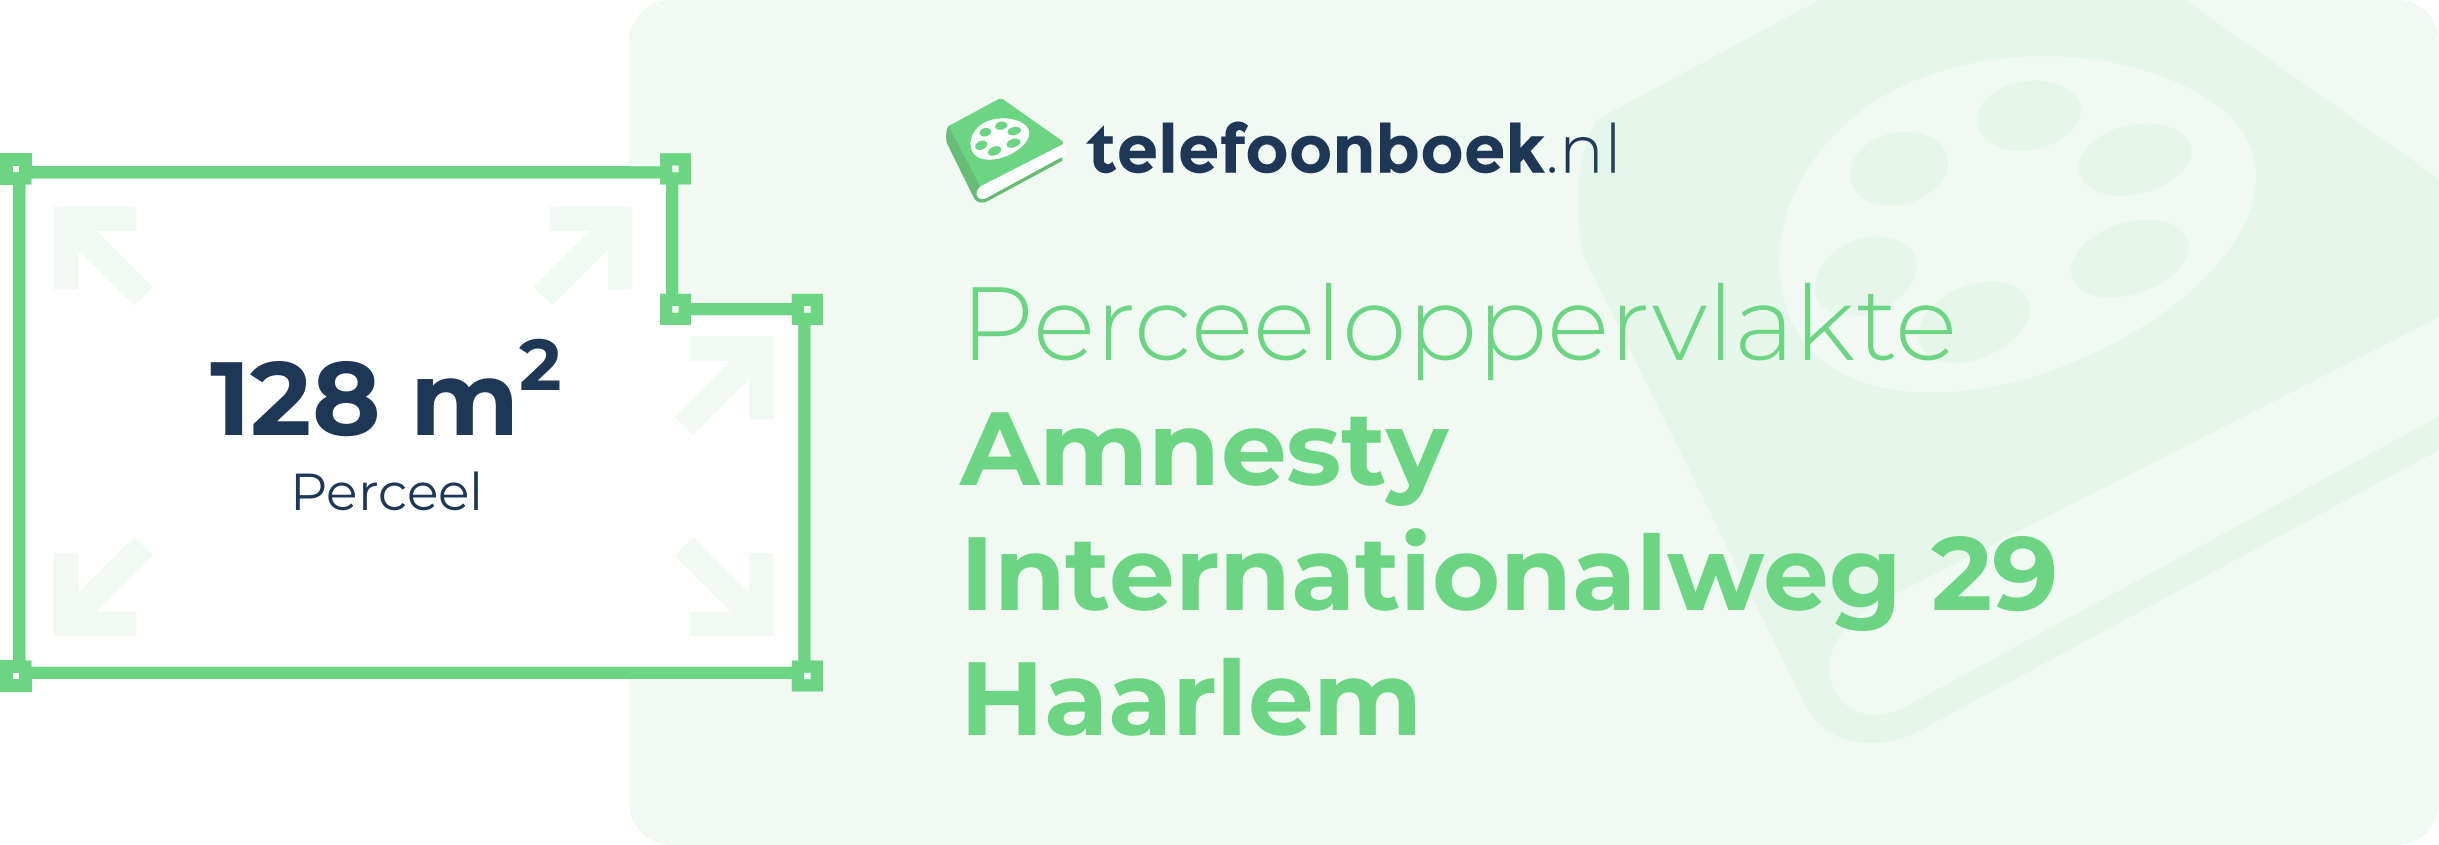 Perceeloppervlakte Amnesty Internationalweg 29 Haarlem